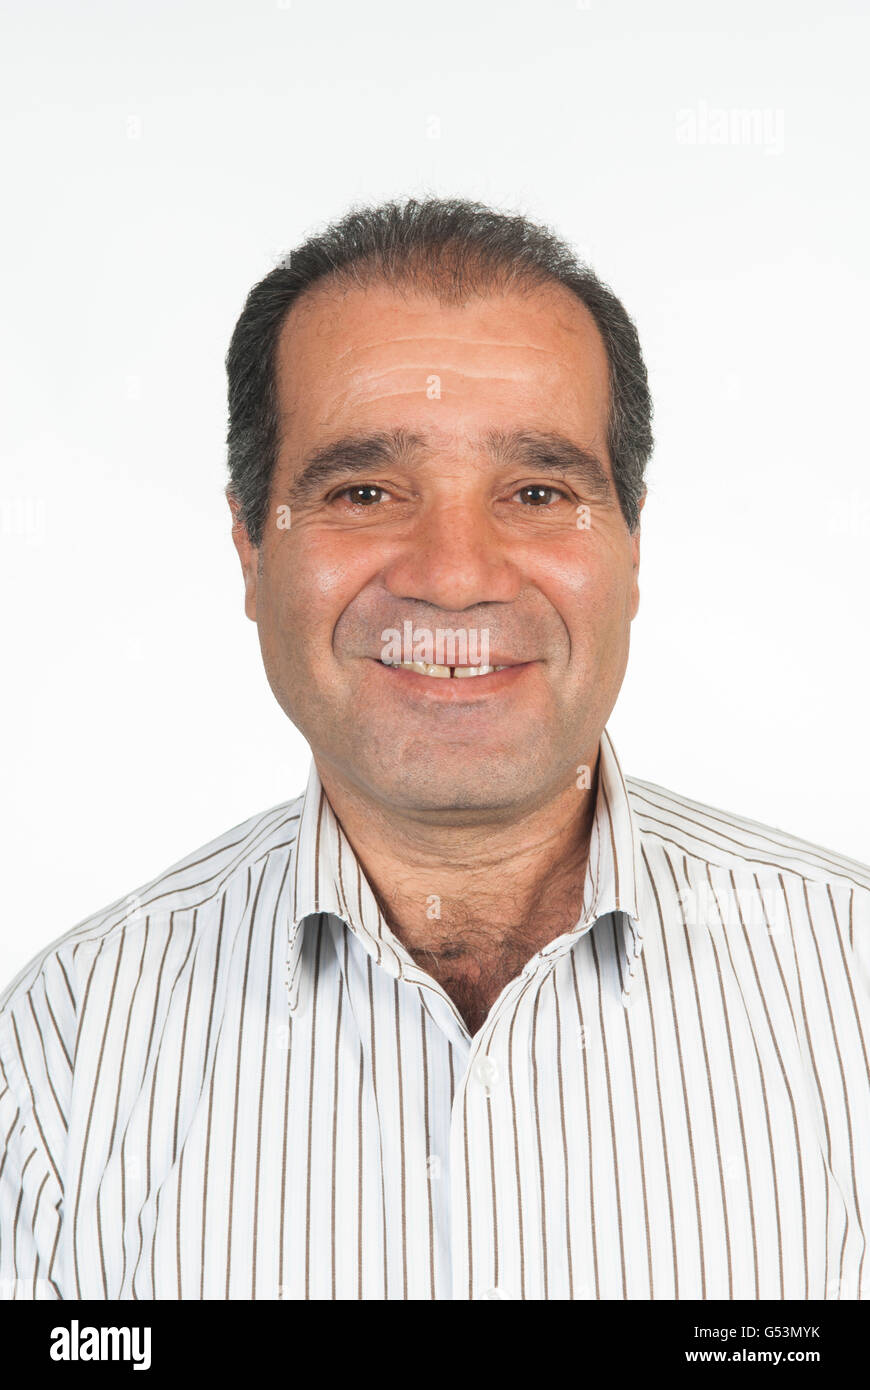 Middle Eastern man smiling Banque D'Images